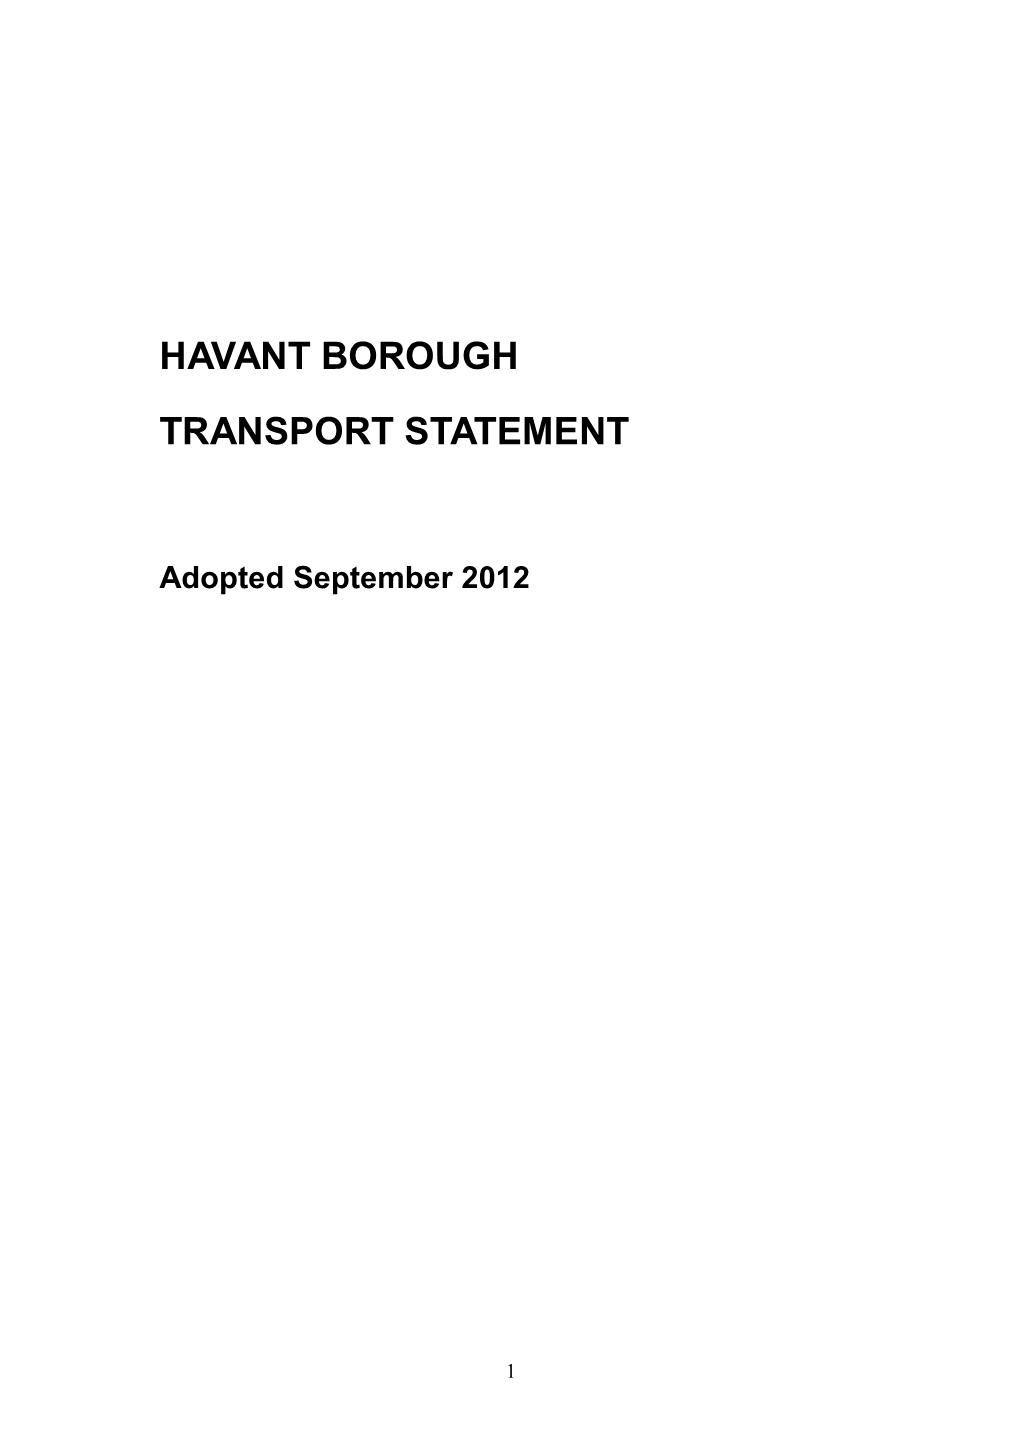 Havant Borough Transport Statement